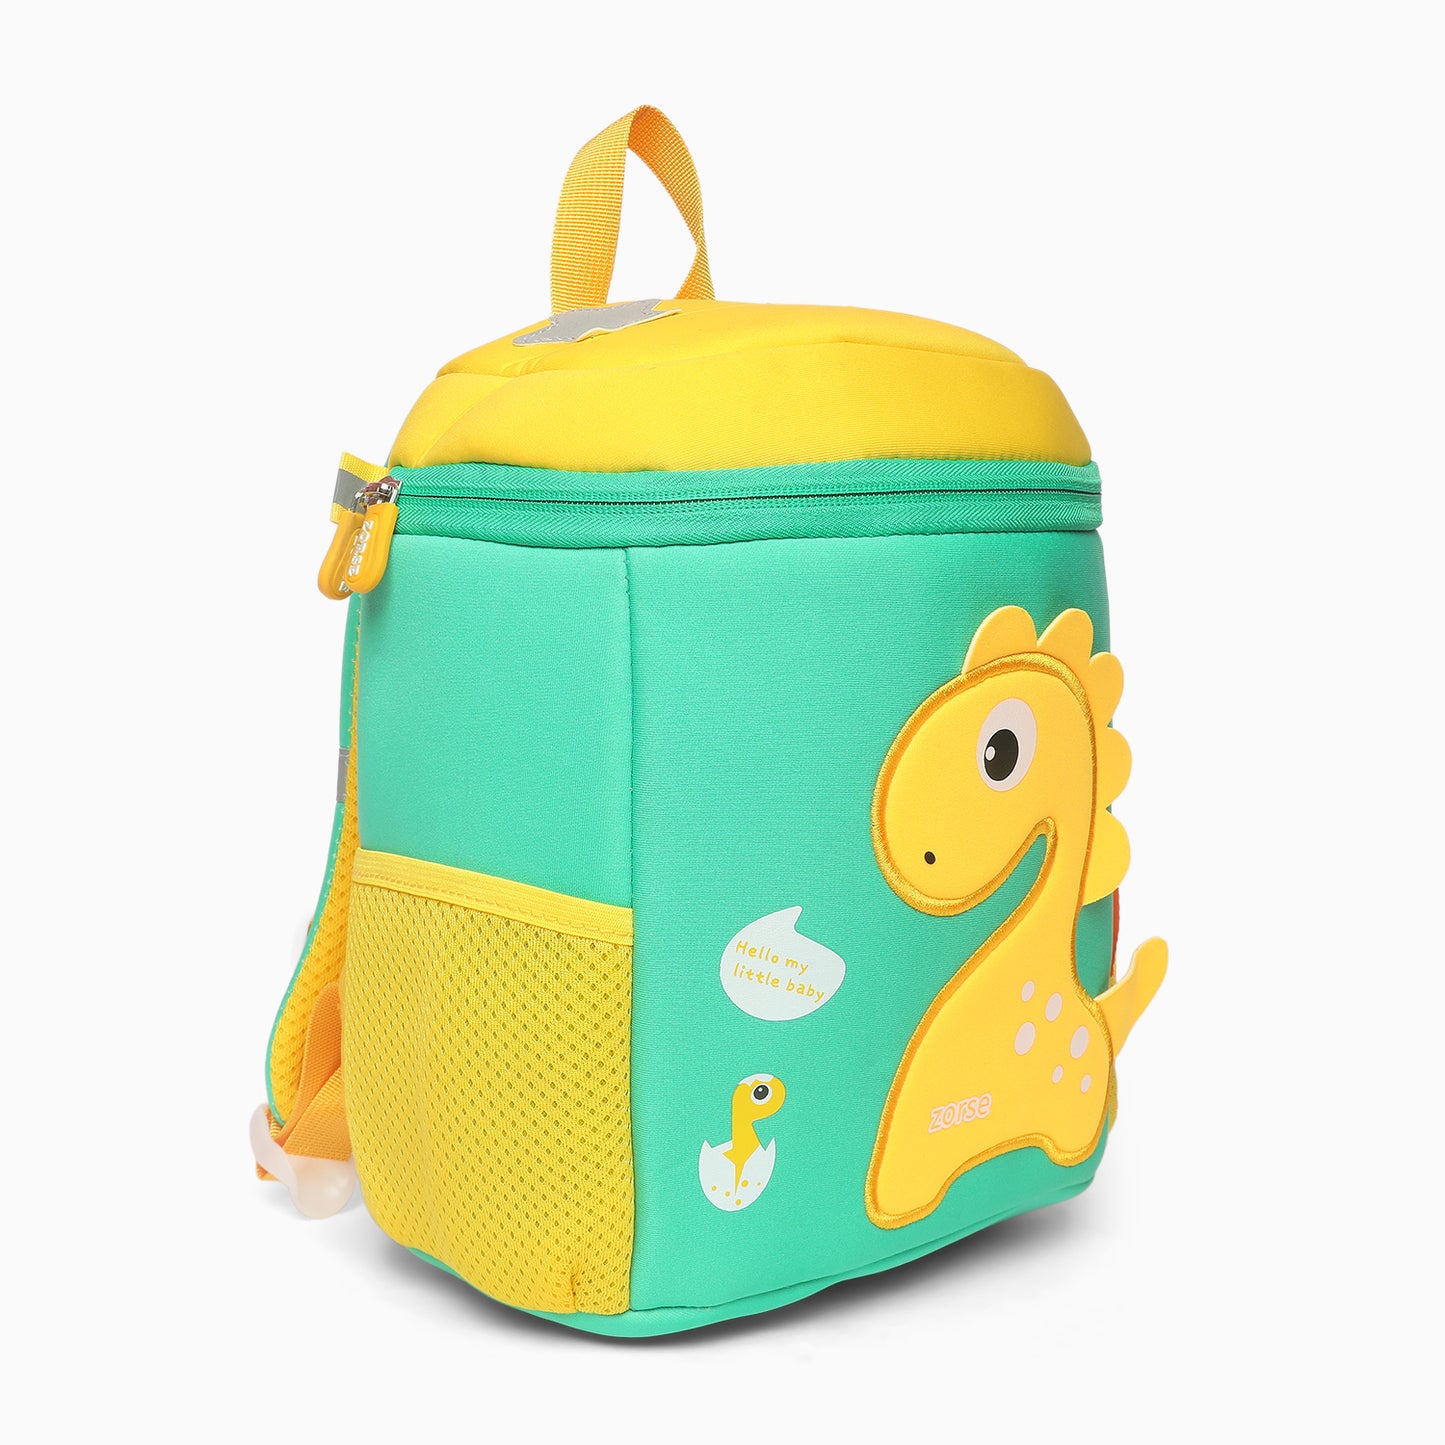 ZORSE Premium Quality 3D Dino Backpack for kindergarten kids single zip small size (yellow) - Kidspark